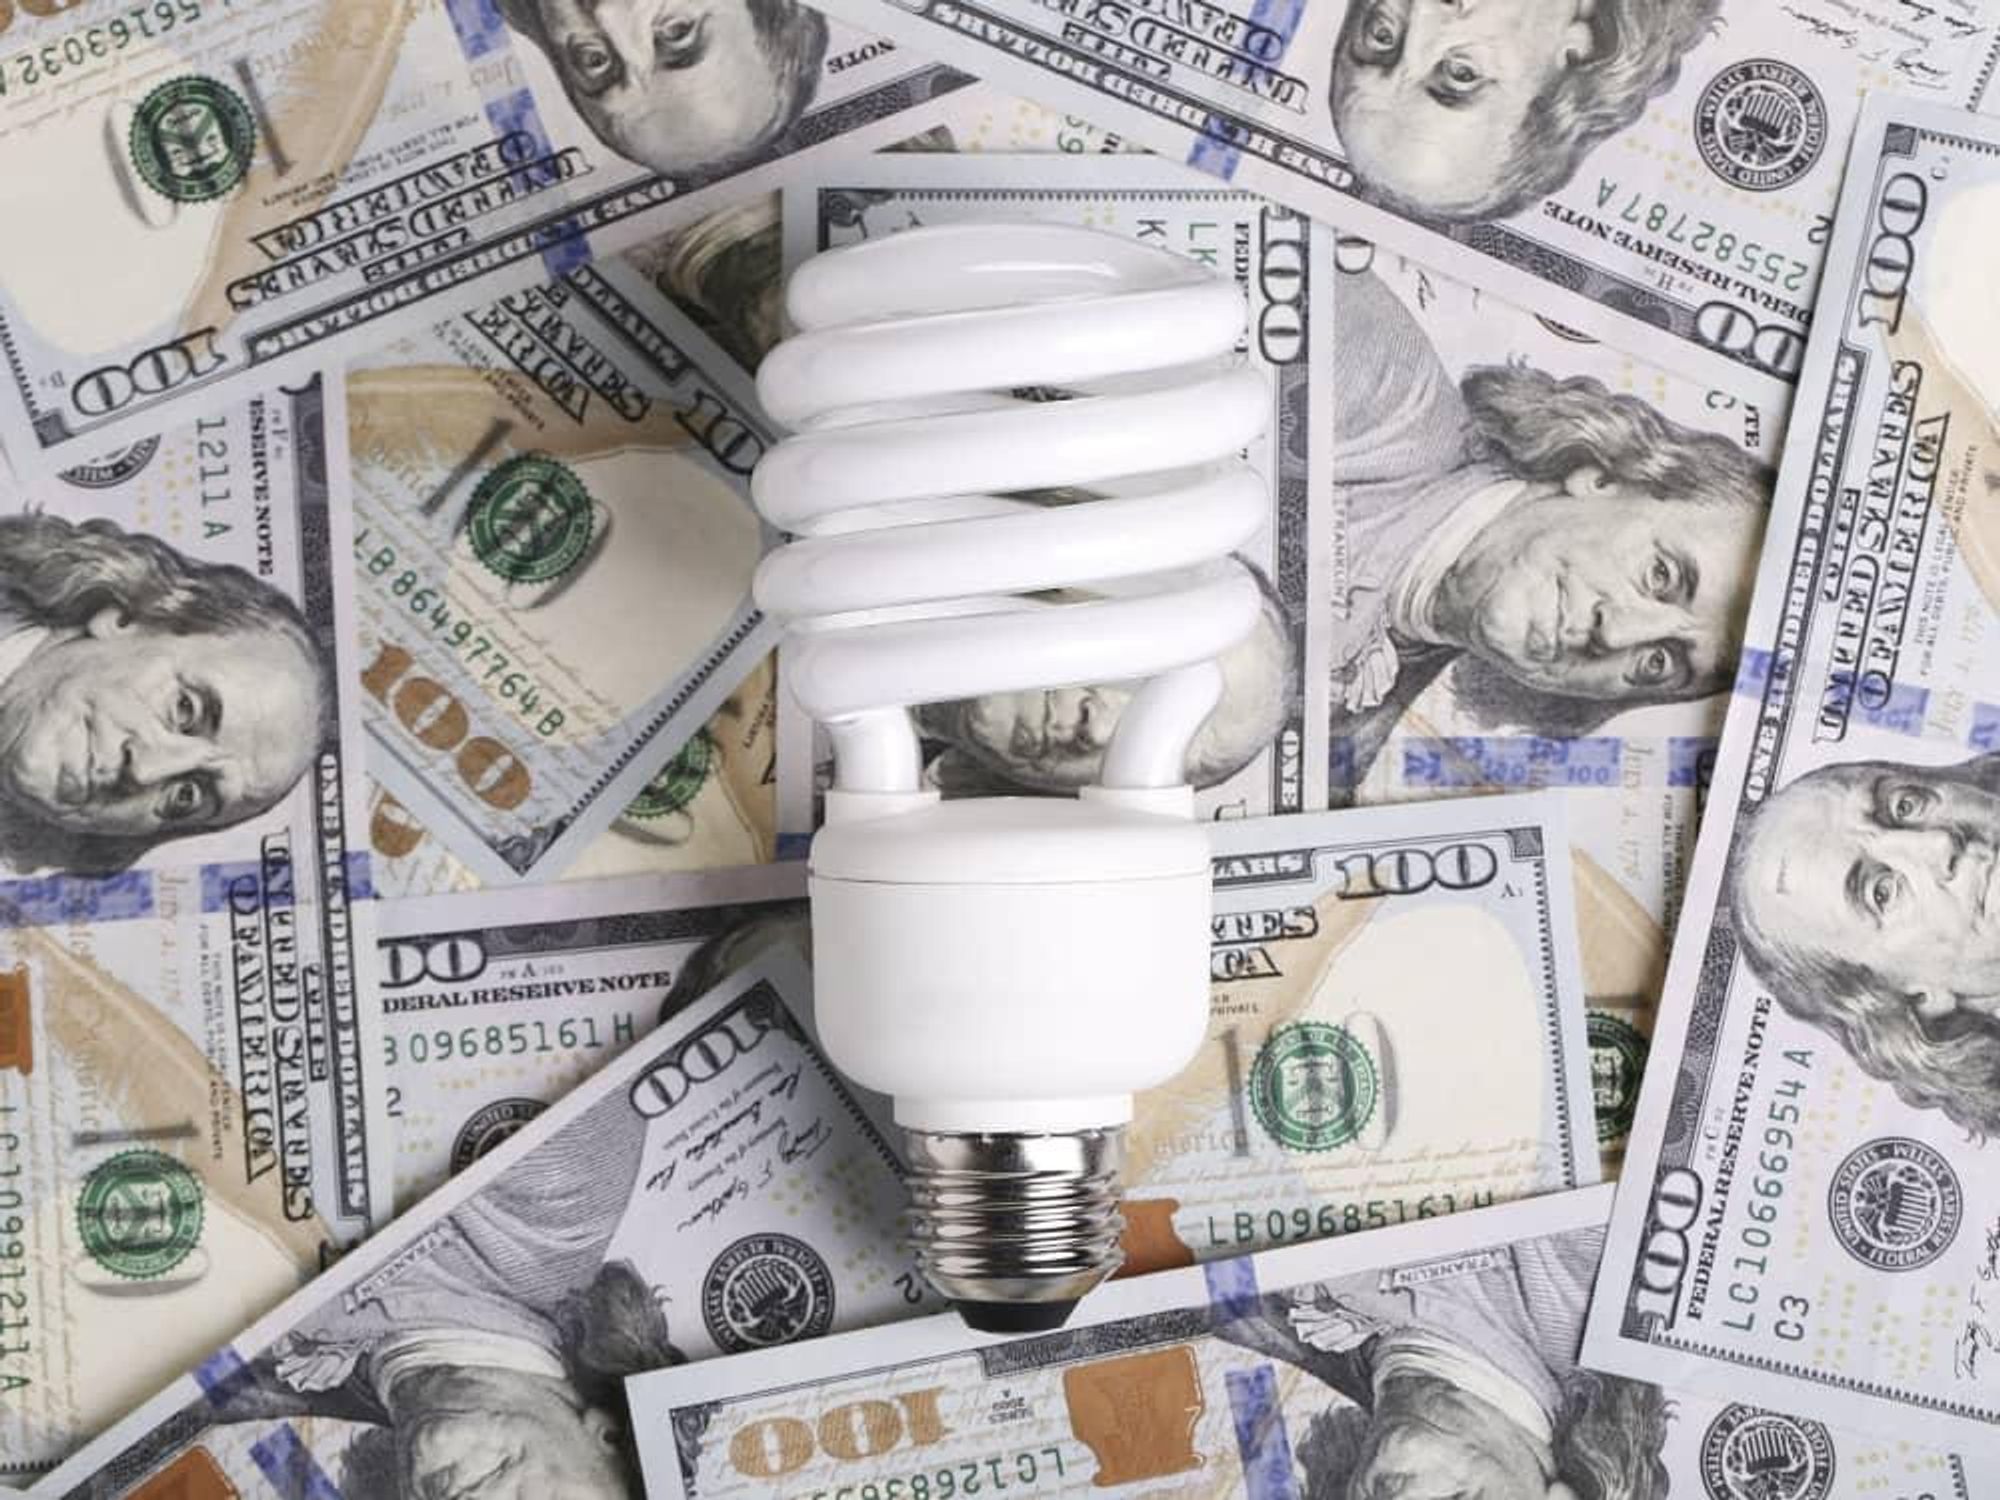 Compact fluorescent light bulb on a pile of cash